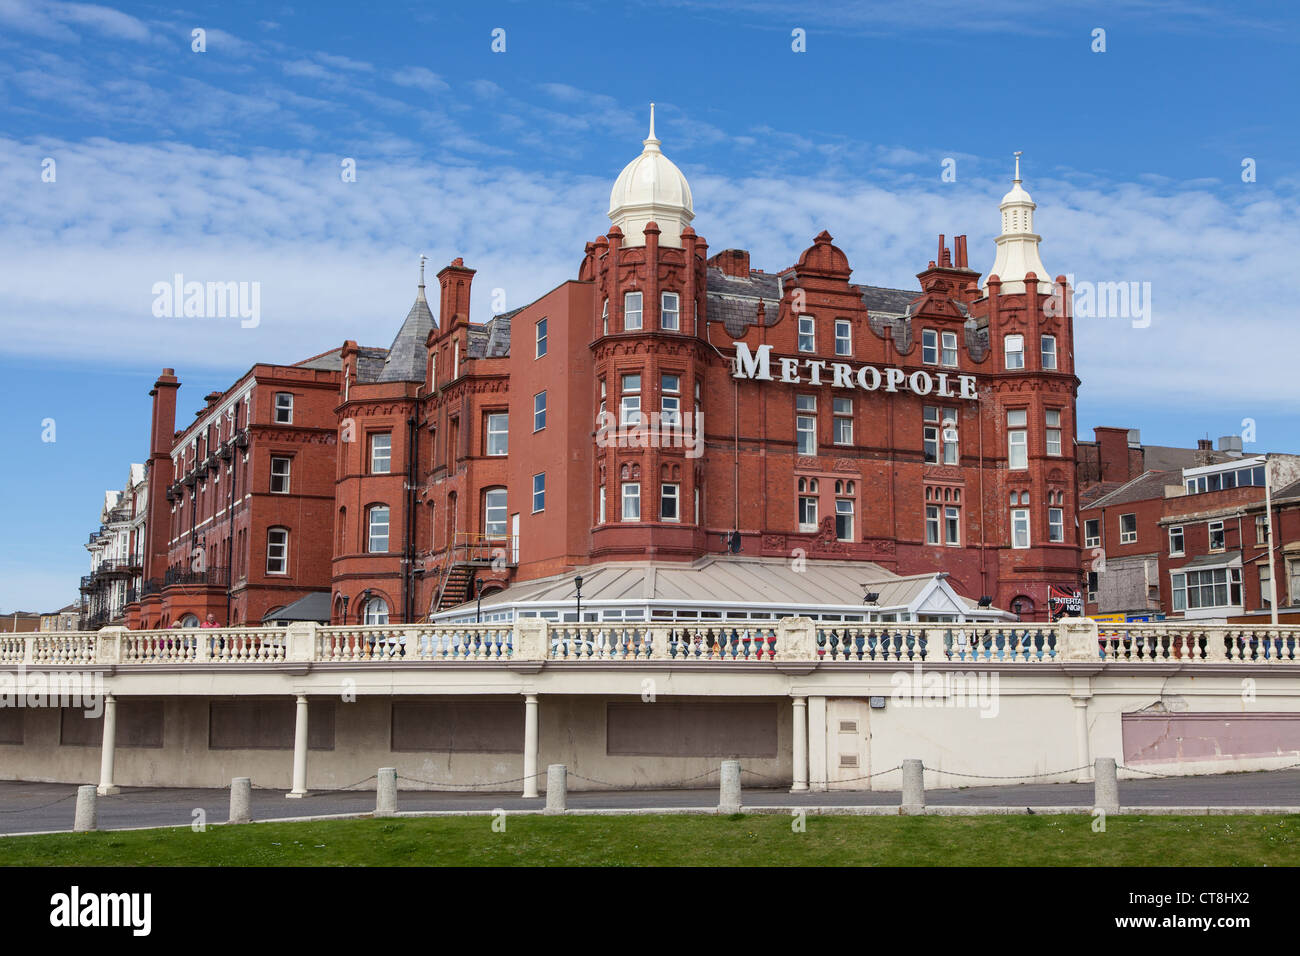 Metropole Hotel, Blackpool Foto Stock